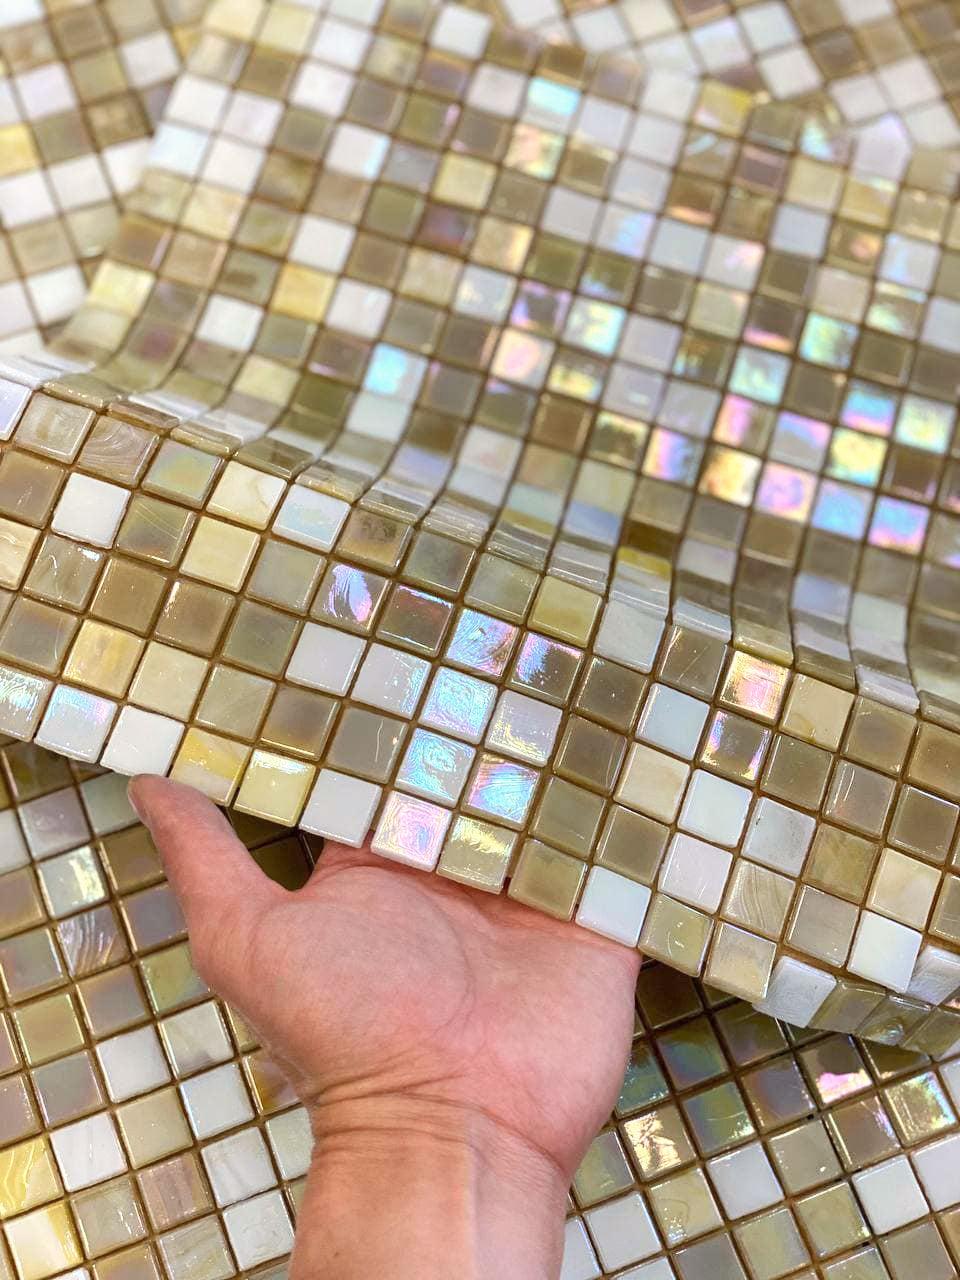 Mixed Gold & White Glass Tile